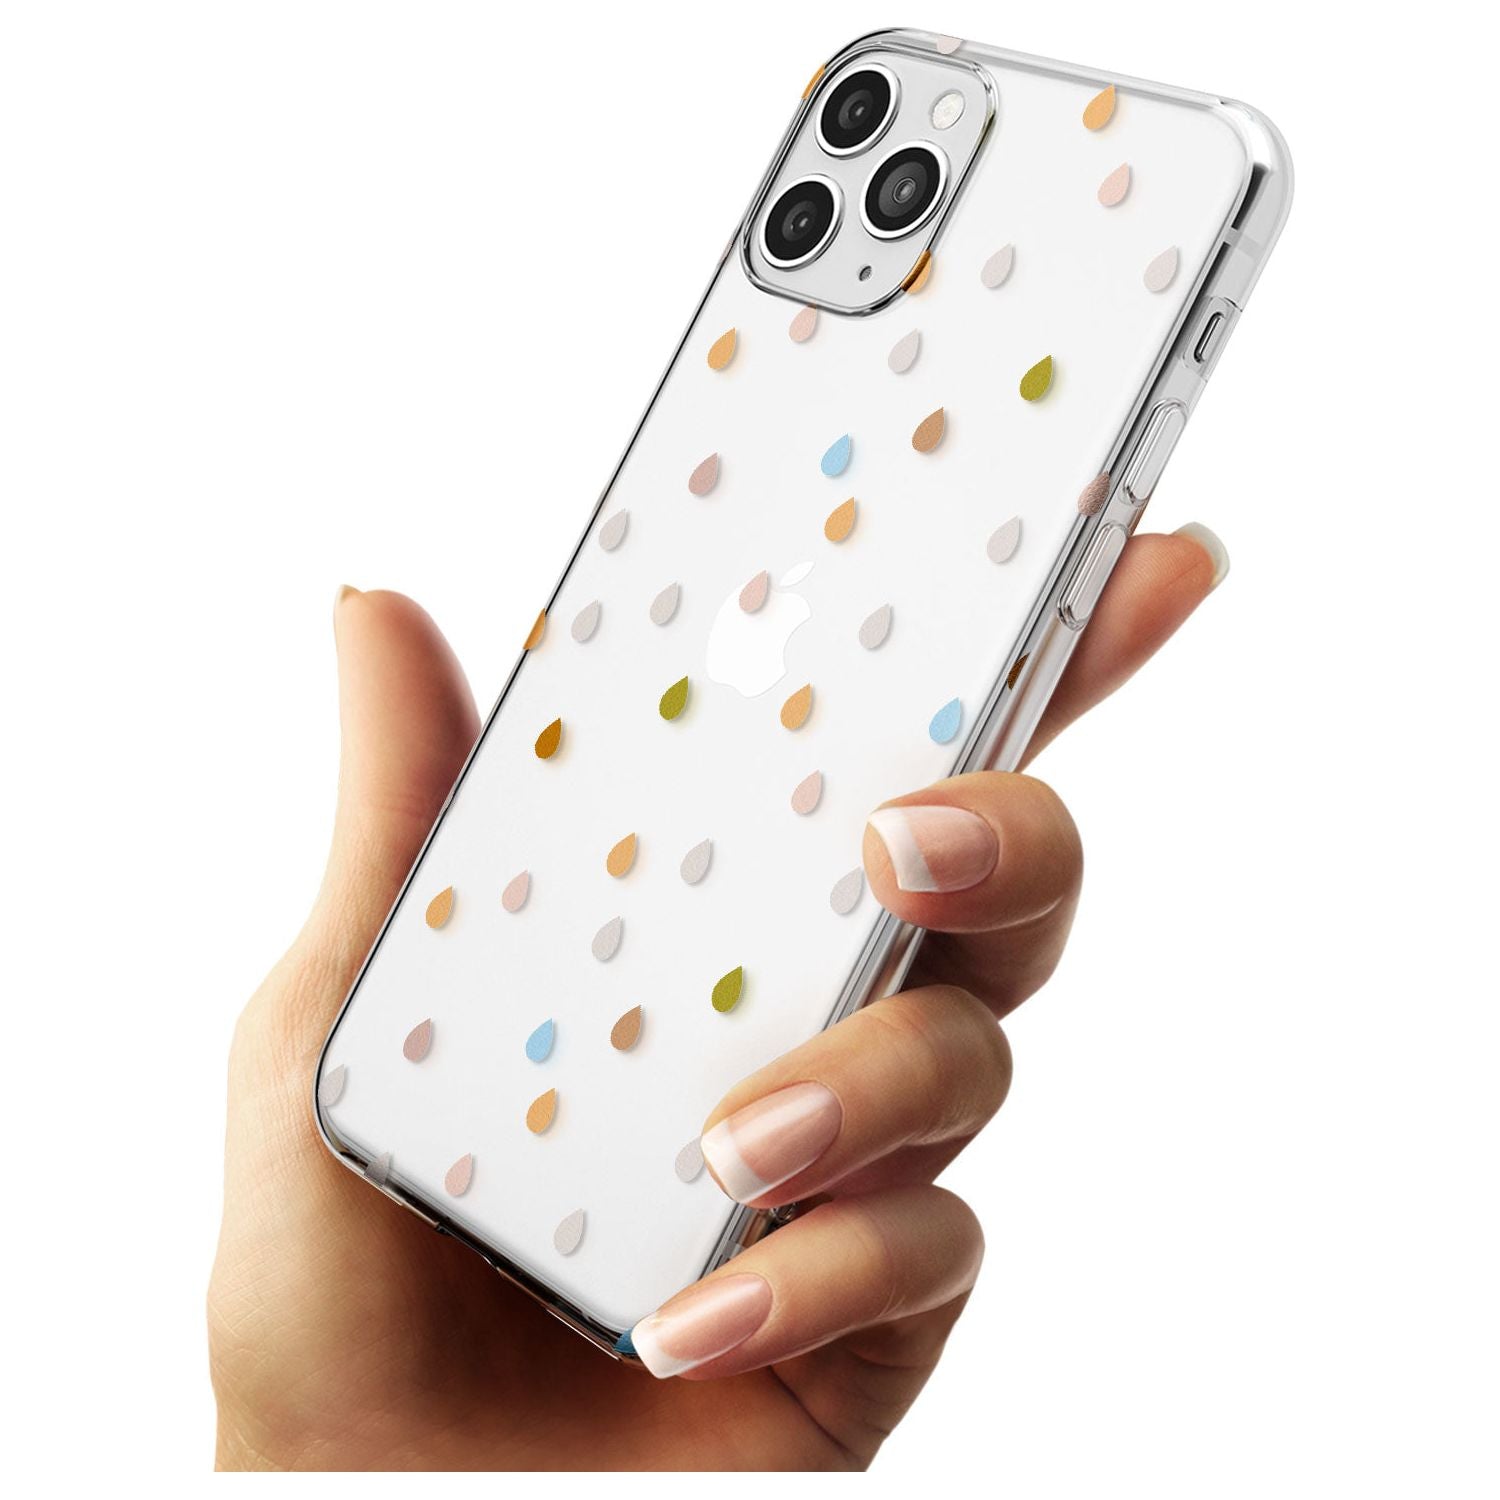 Raindrops Black Impact Phone Case for iPhone 11 Pro Max